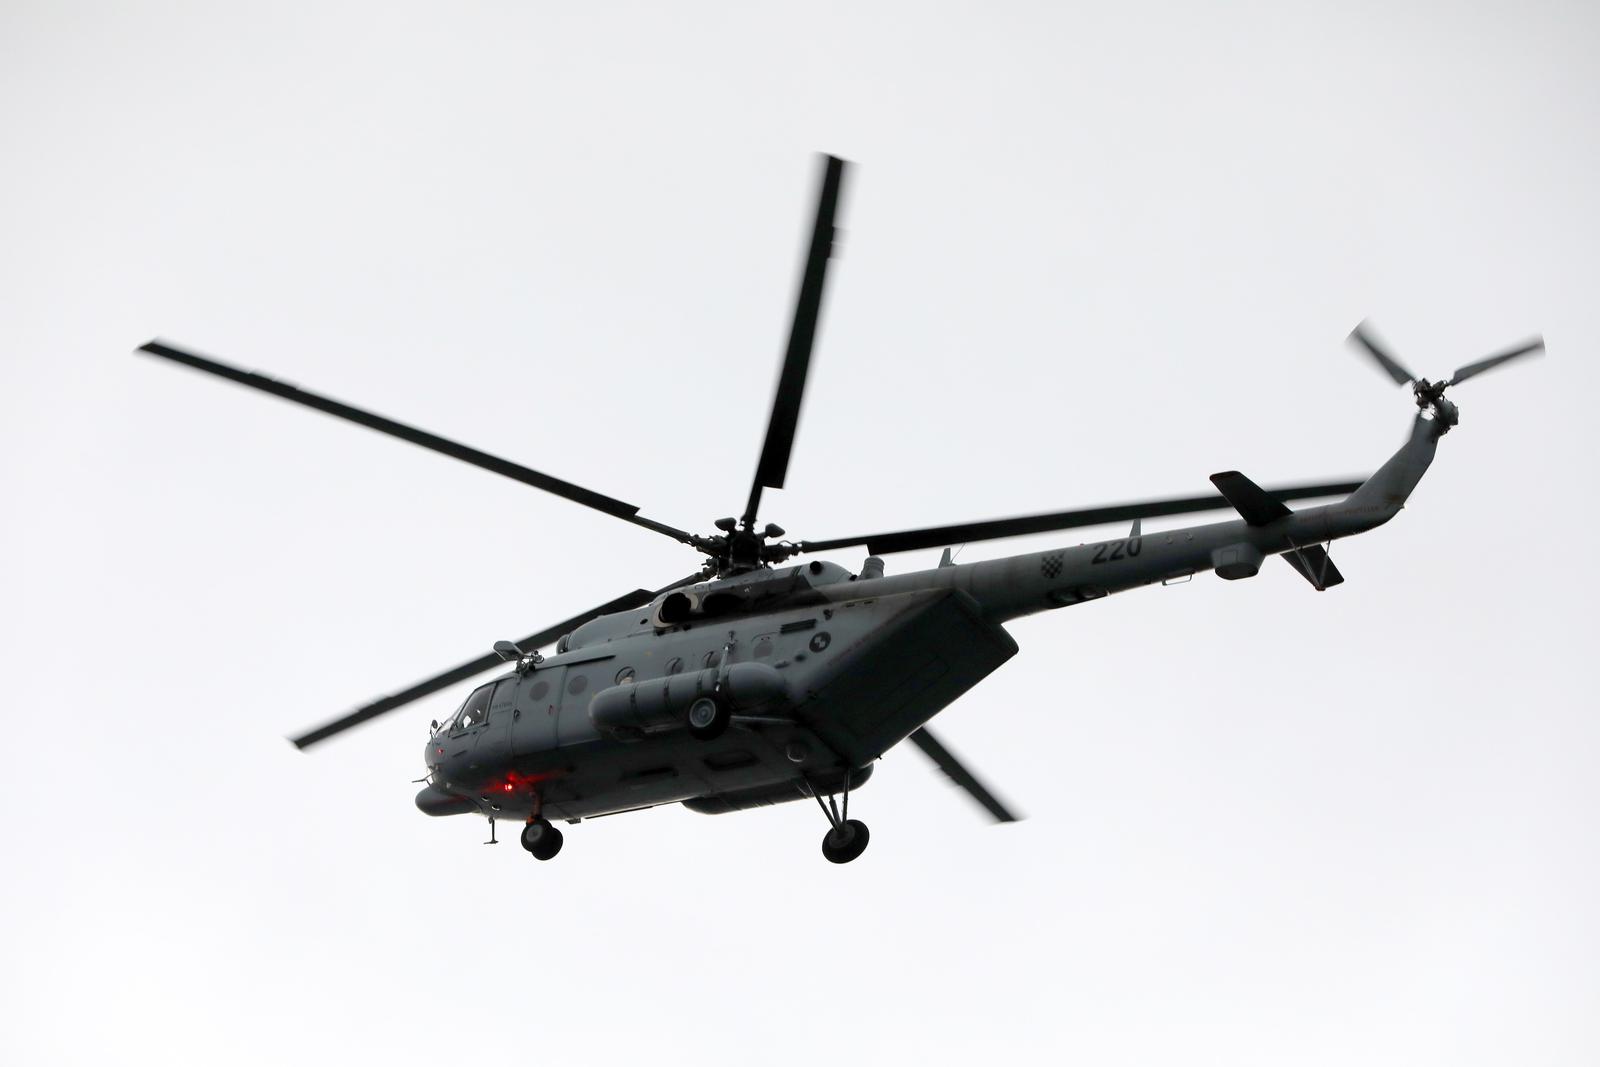 22.10.2022., Rijeka - Vojni helikopter leti iznad grada. Photo: Goran Kovacic/PIXSELL